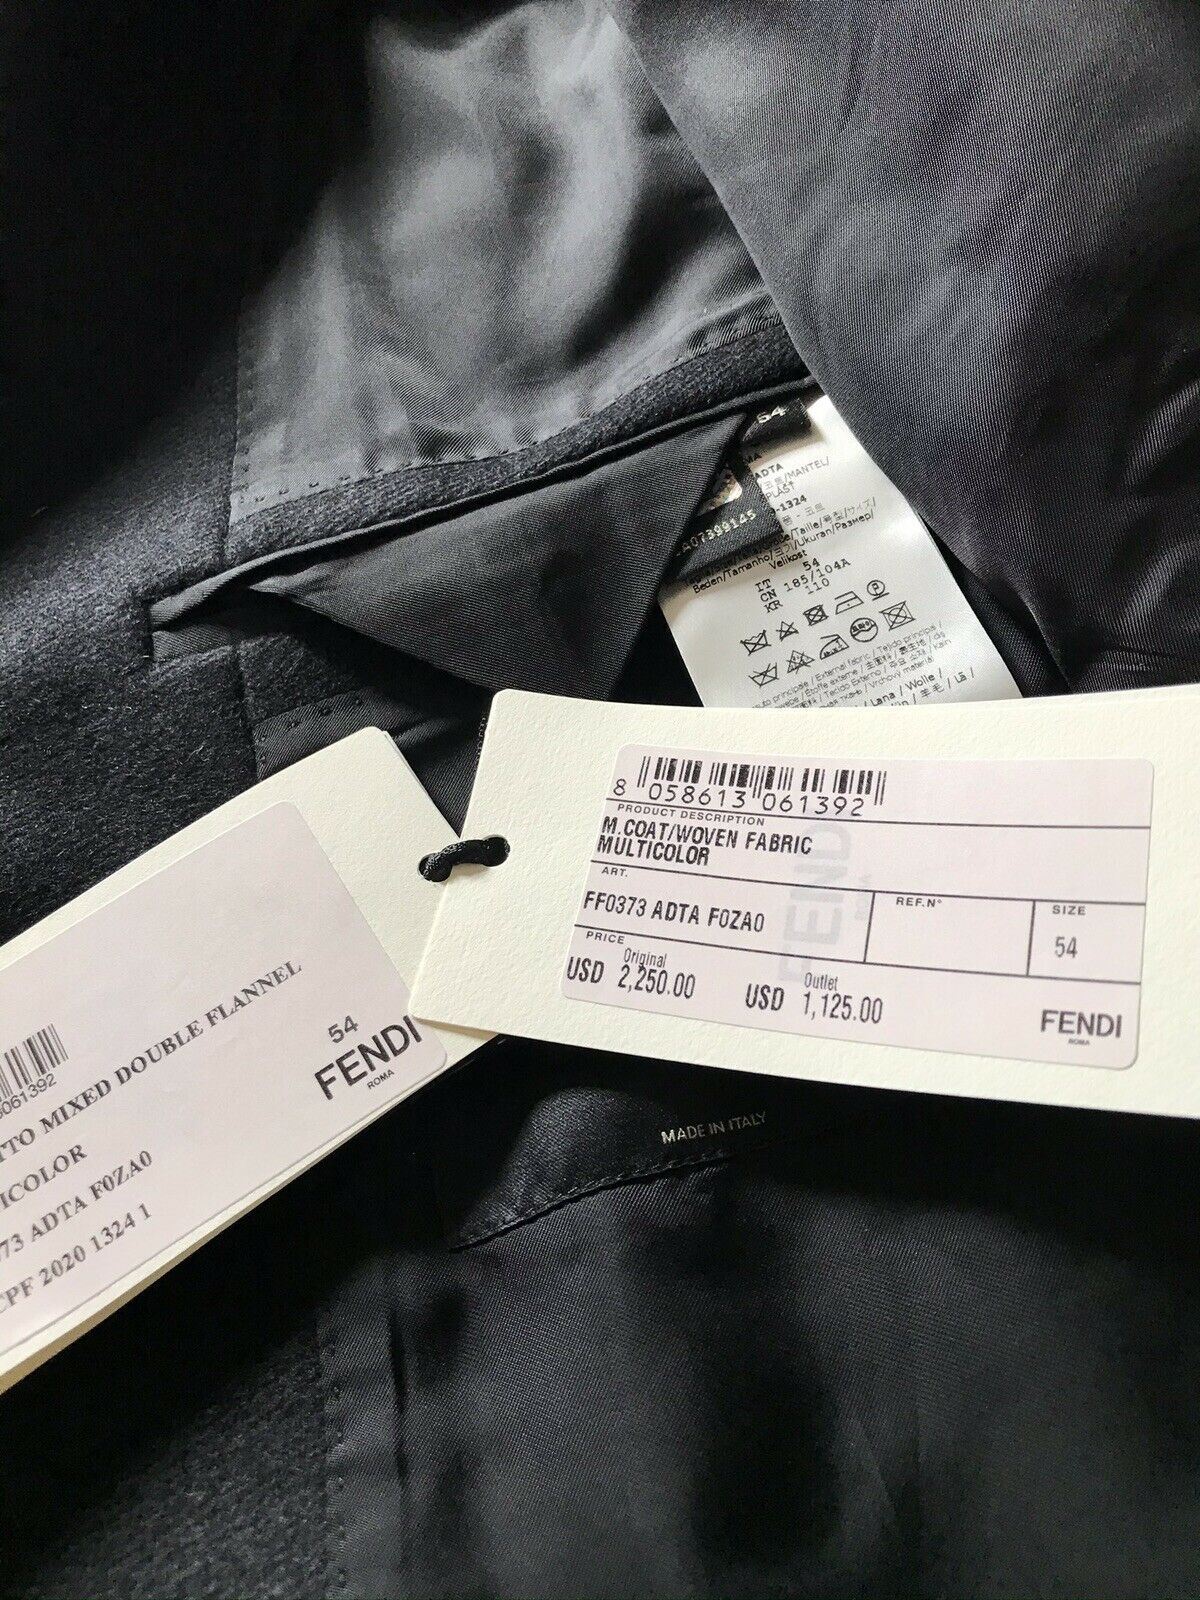 New $2250 Fendi Mens Overcoat Coat Black/Gray Size 44 US ( 54 Ita ) Italy